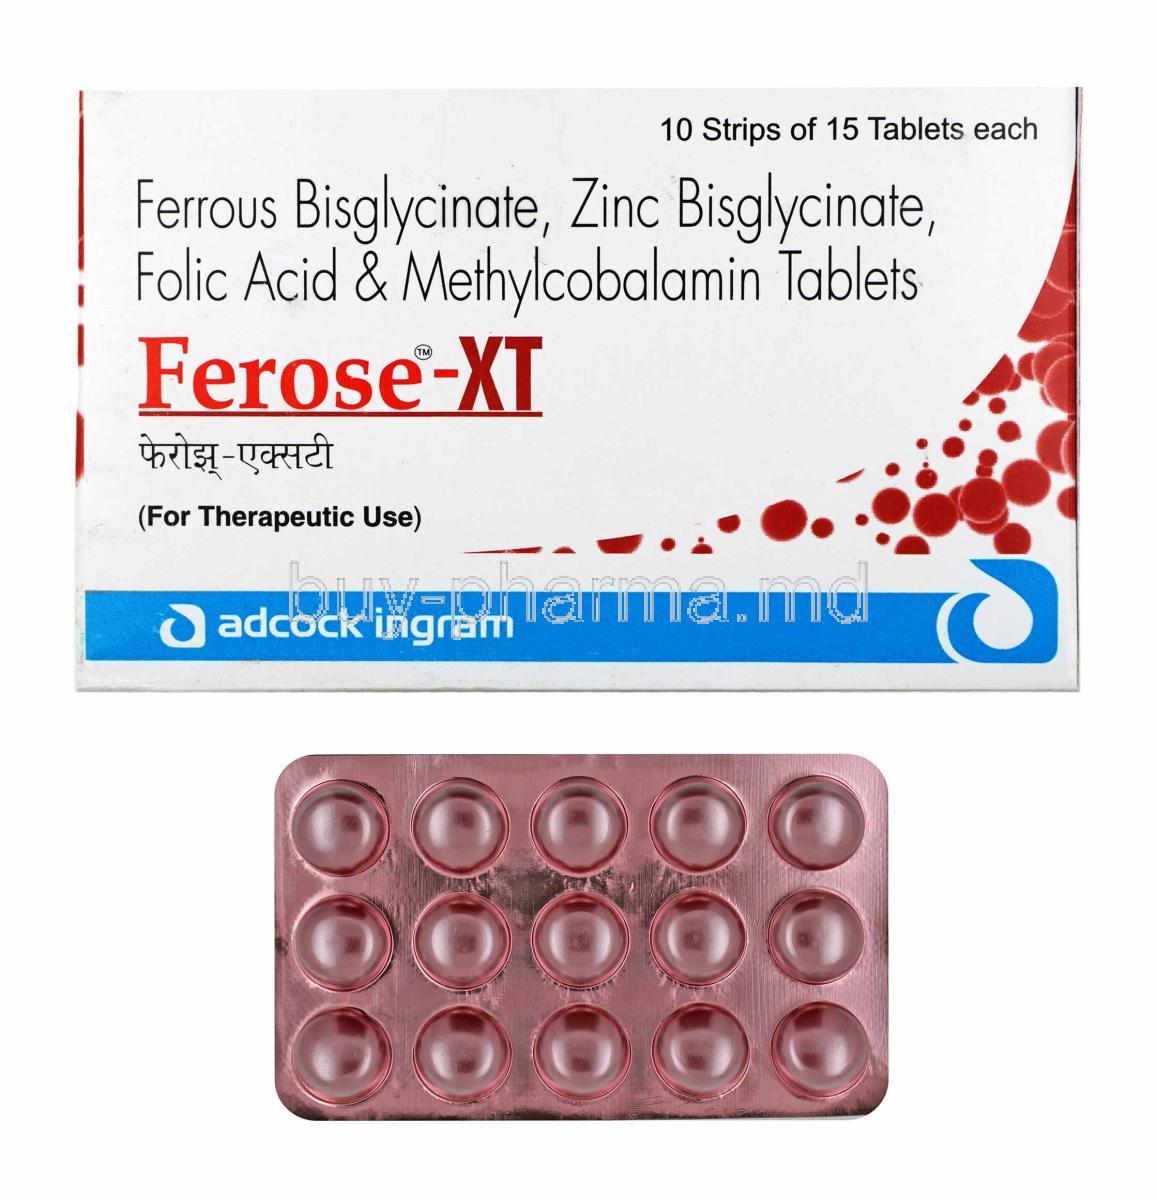 Ferose -XT box and tablets